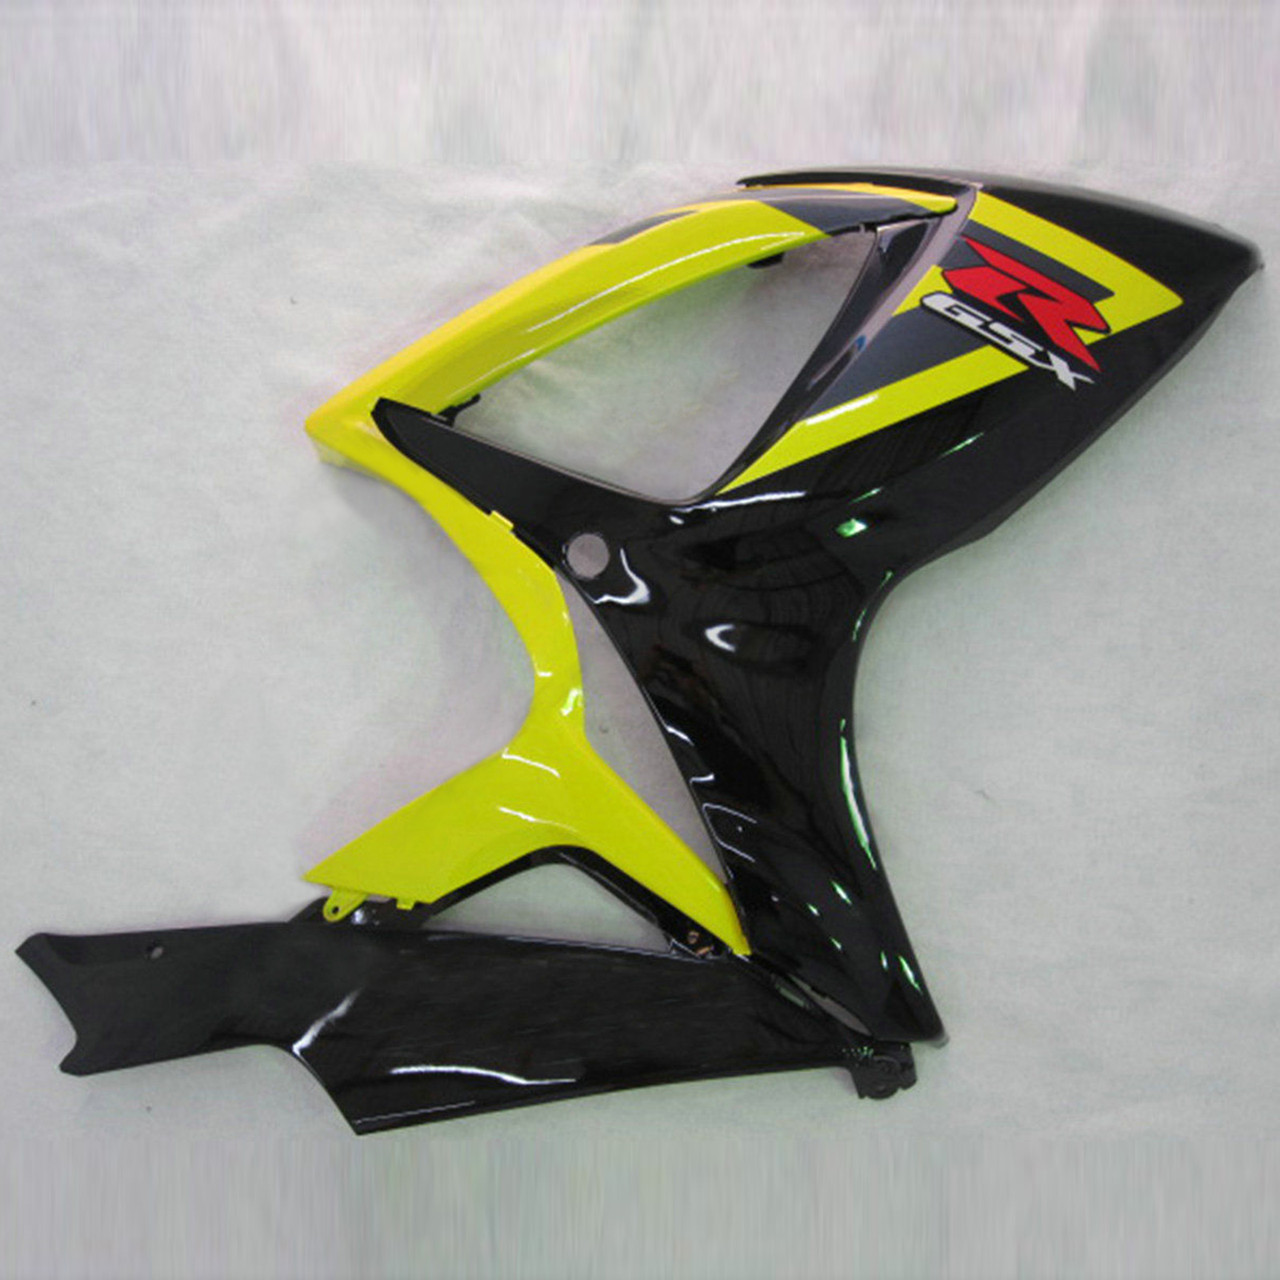 Suzuki GSXR 600 750 2006-2007 Yellow Black Injection Body Cover Fairing Kits